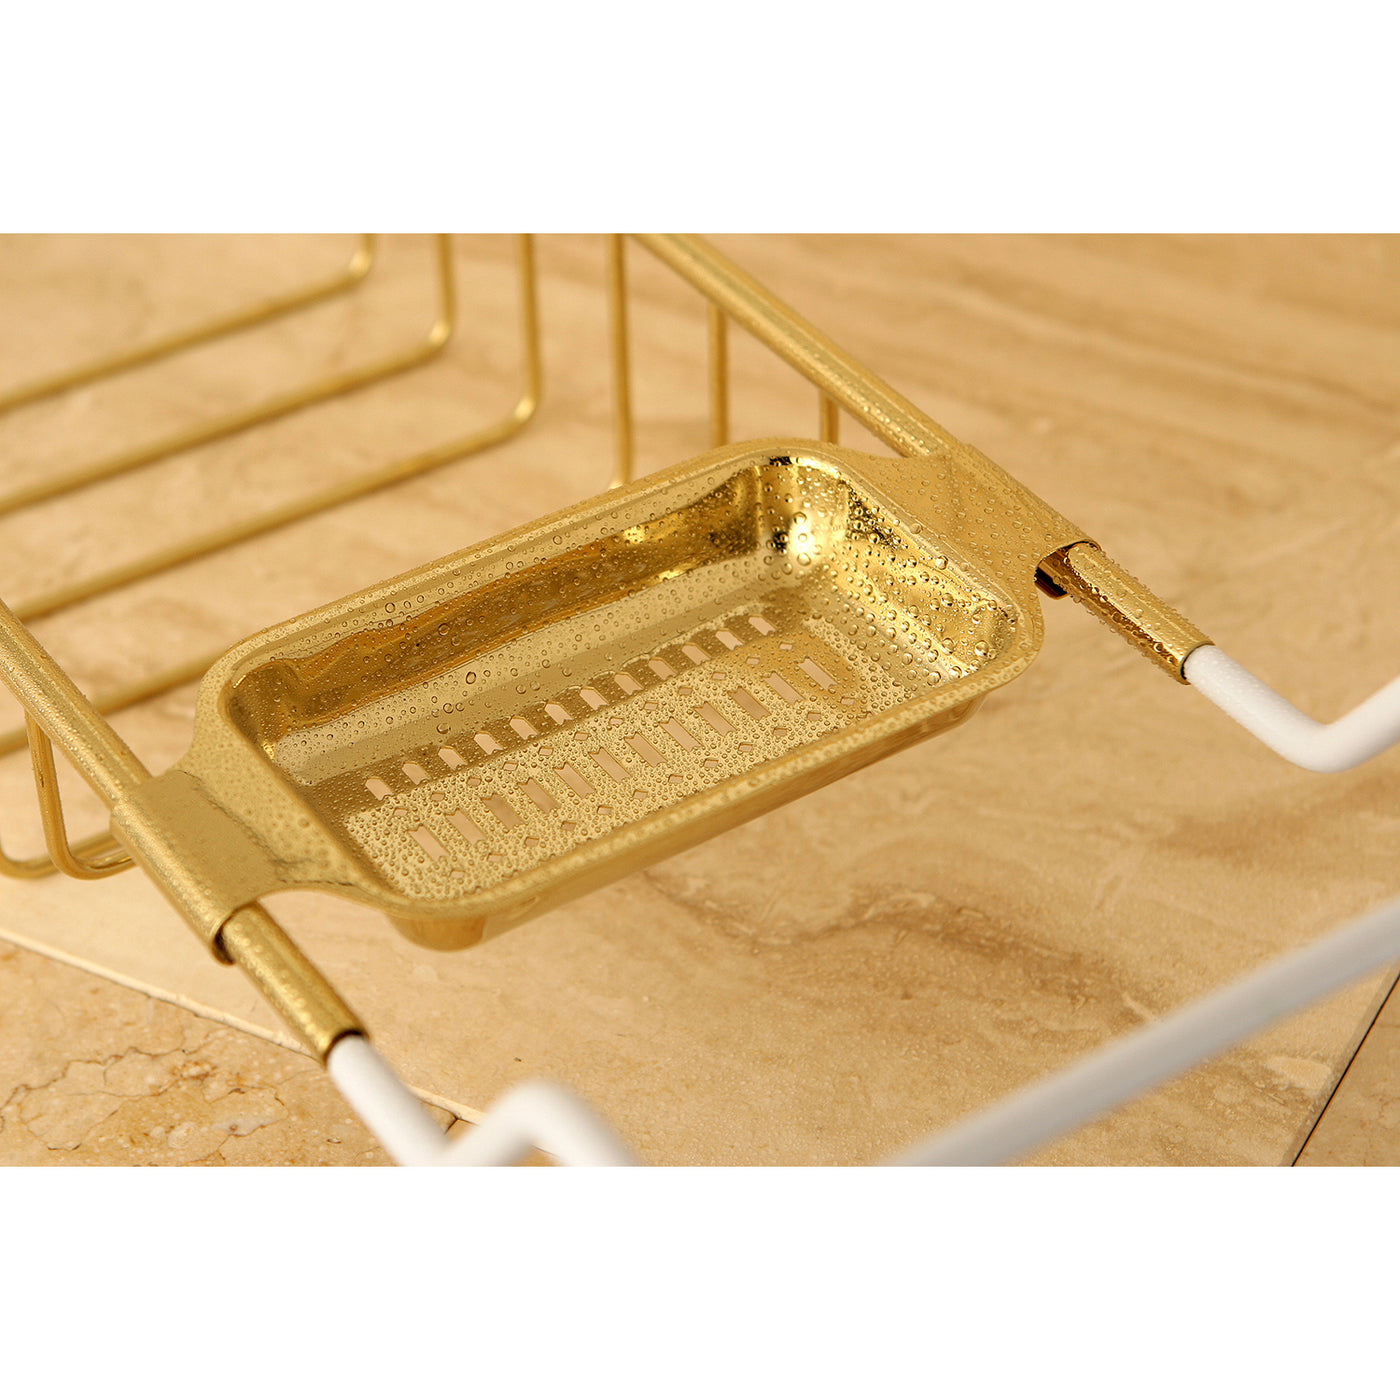 Elements of Design DS2152 Bathtub Caddy Tray, Polished Brass